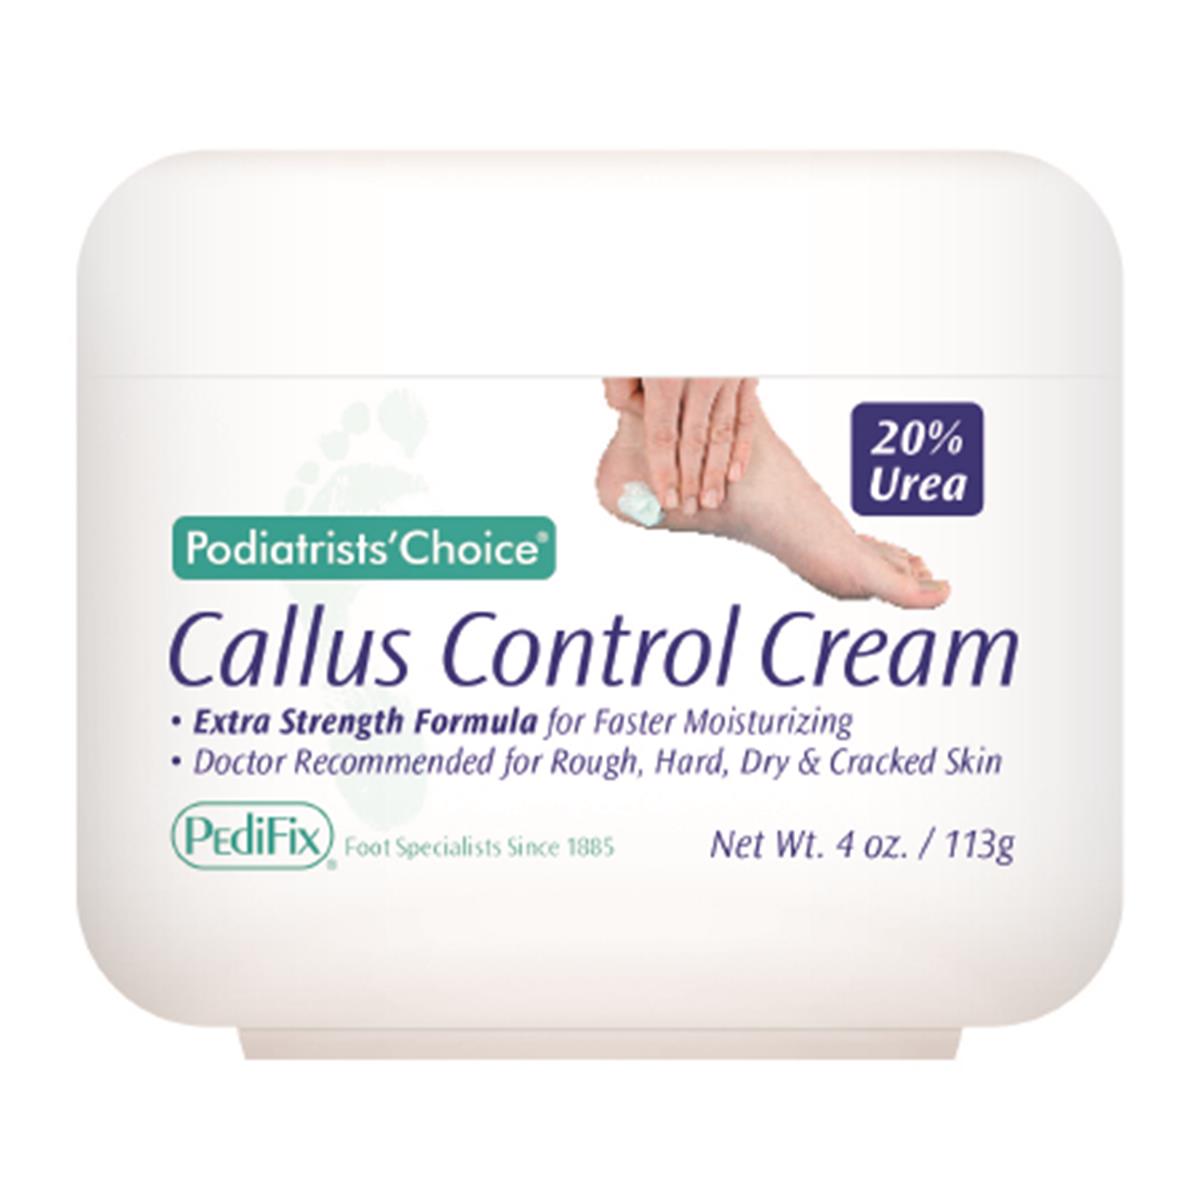 P3310 4 Oz Podiatrists Choice Callus Control Cream